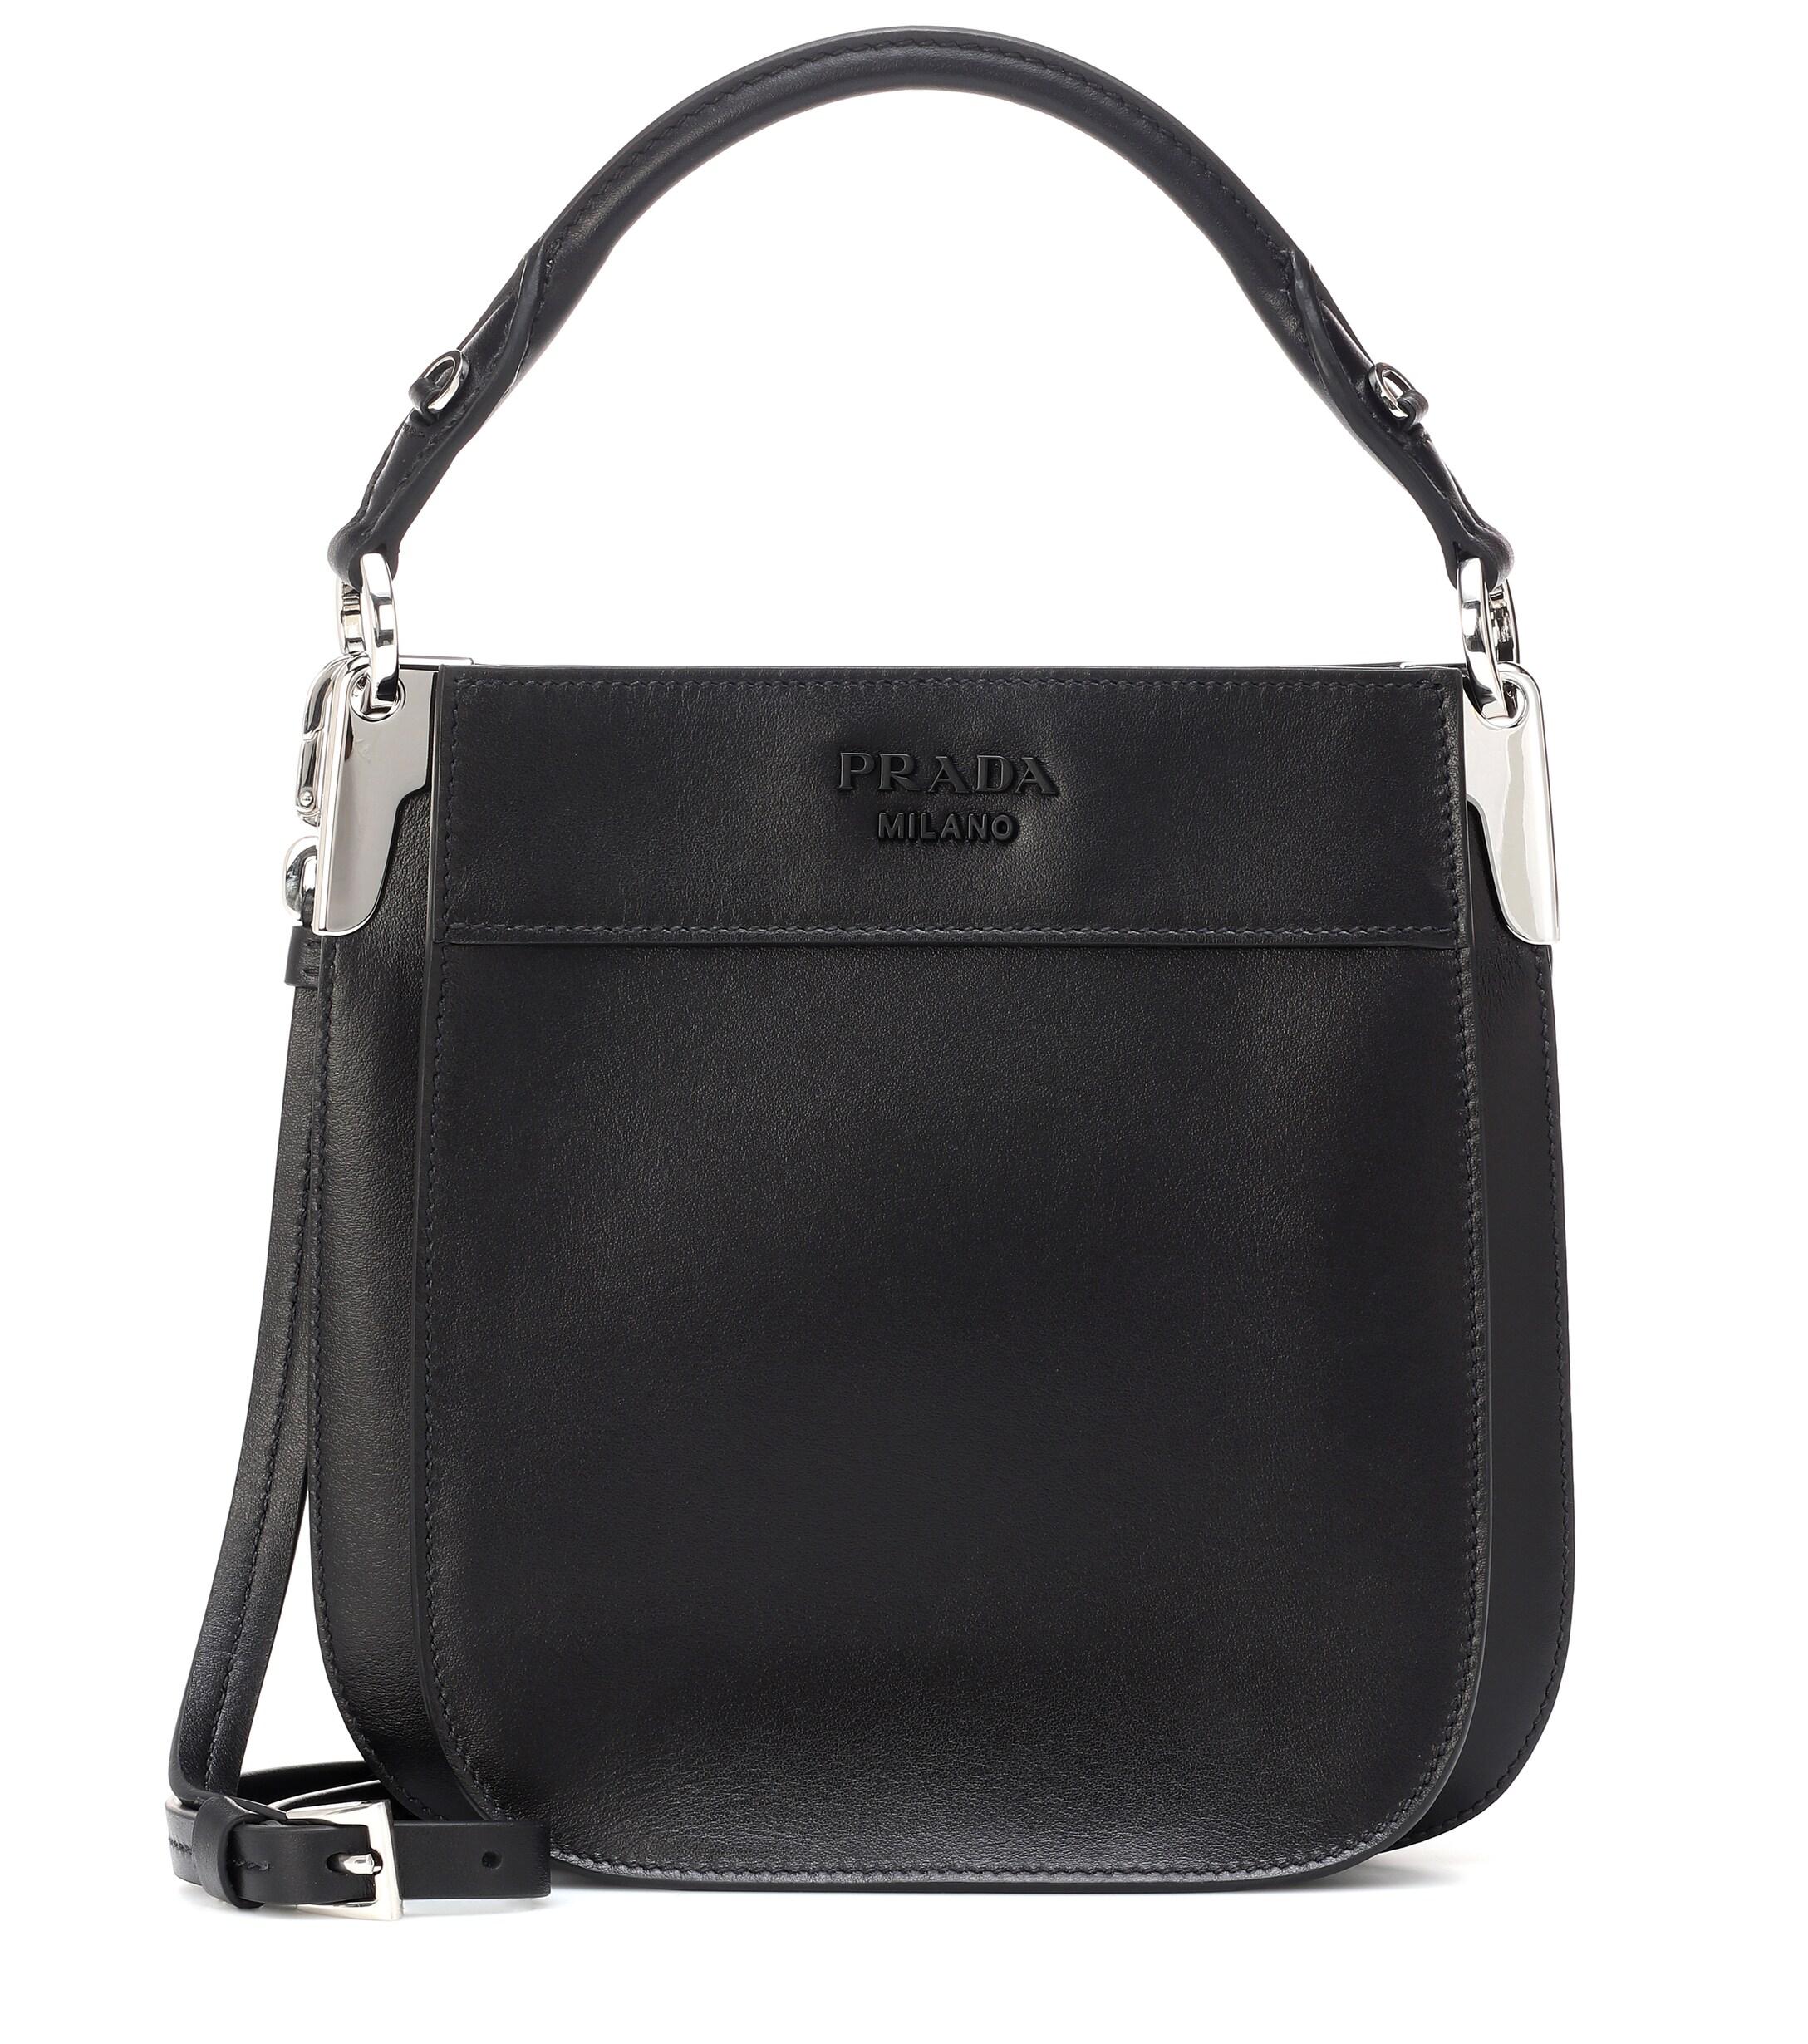 Prada Margit Leather Shoulder Bag in Black - Lyst